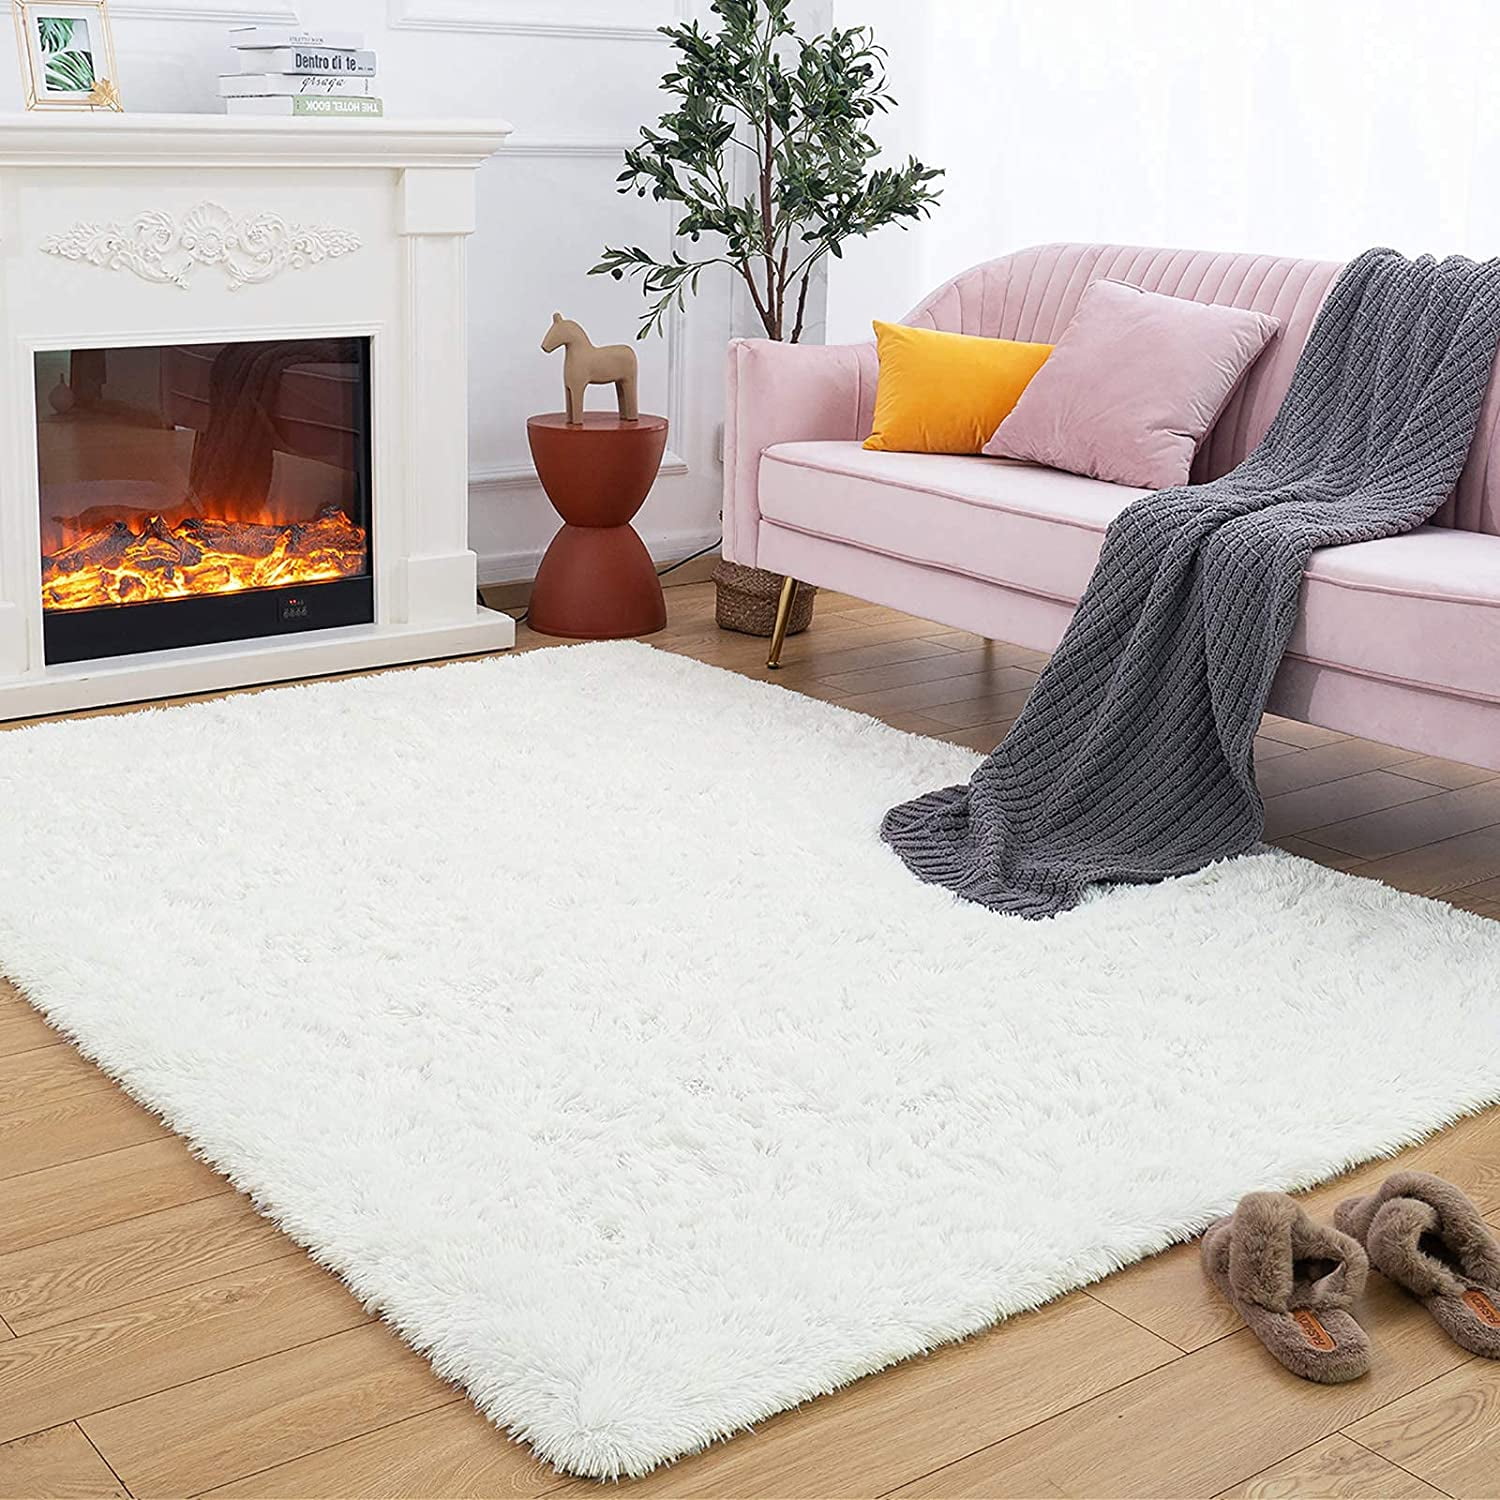 TWINNIS Luxury Fluffy Rugs Ultra Soft Shag Rug Carpet for Bedroom